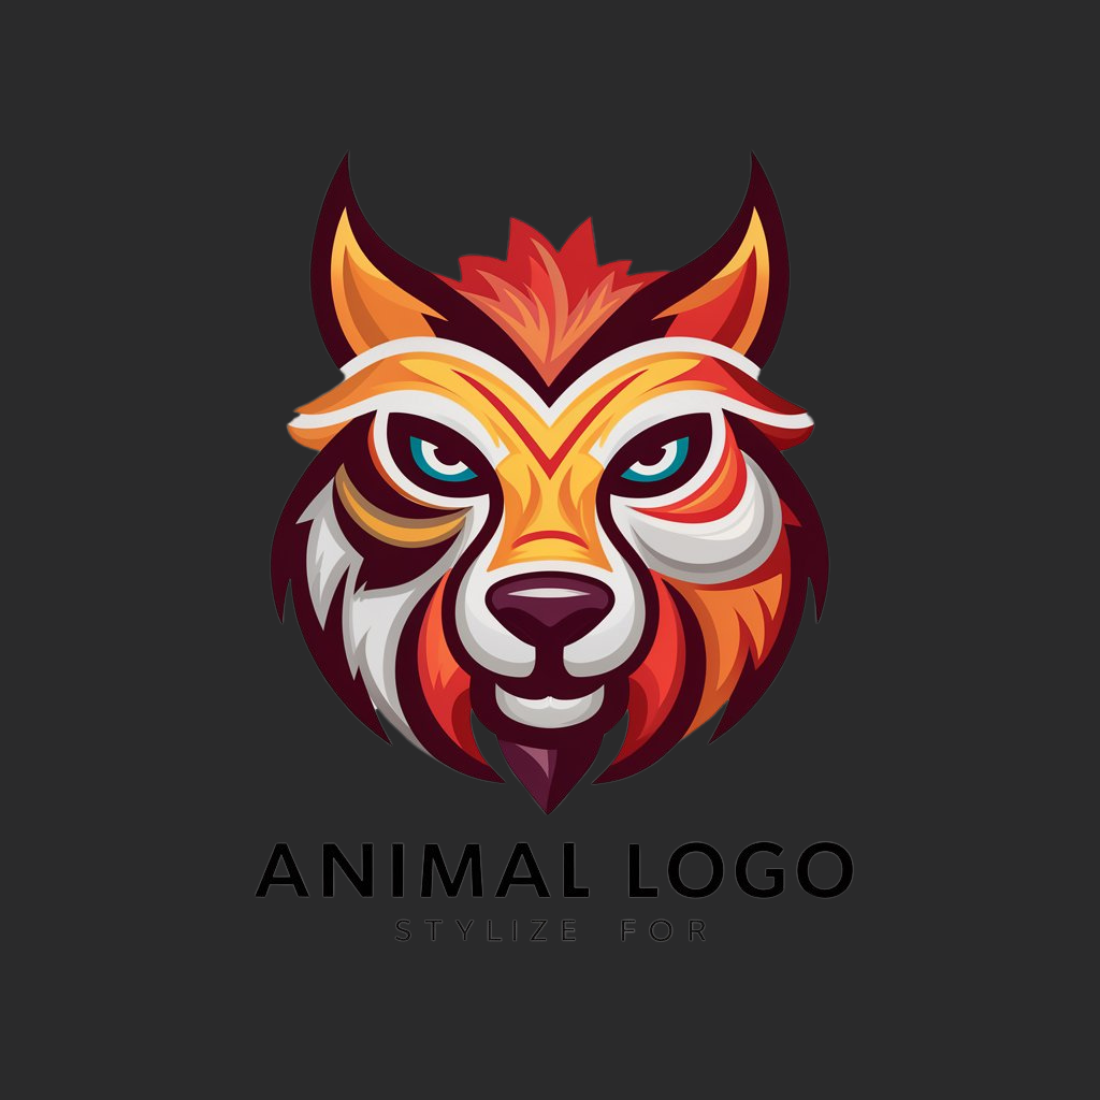 Animal logo design preview image.